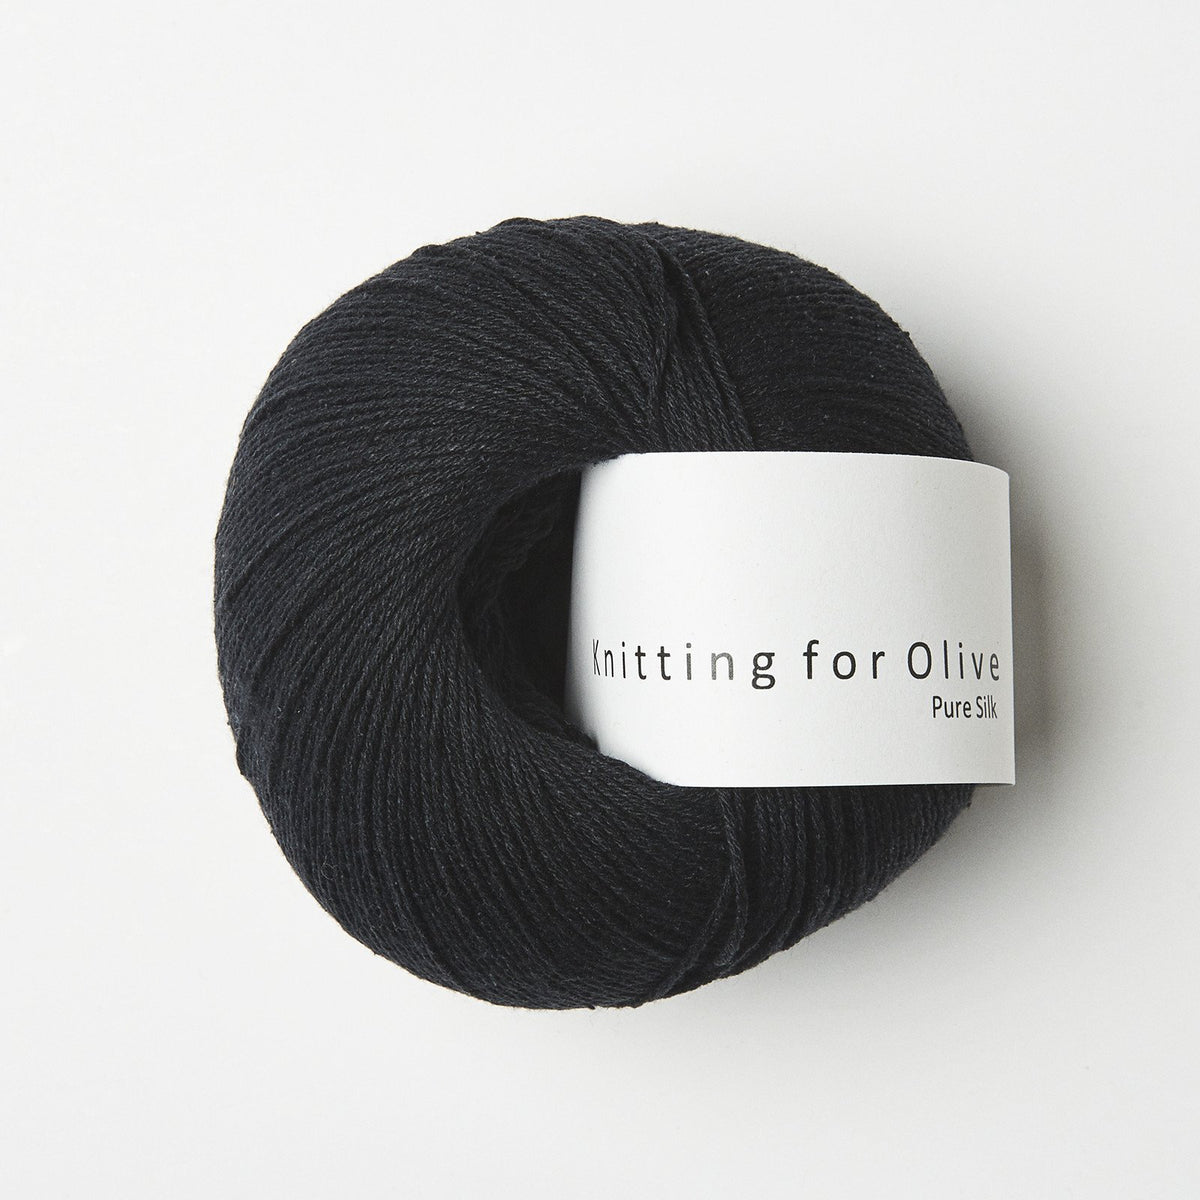 Knitting_for_olive_puresilk_kul_12113_c8